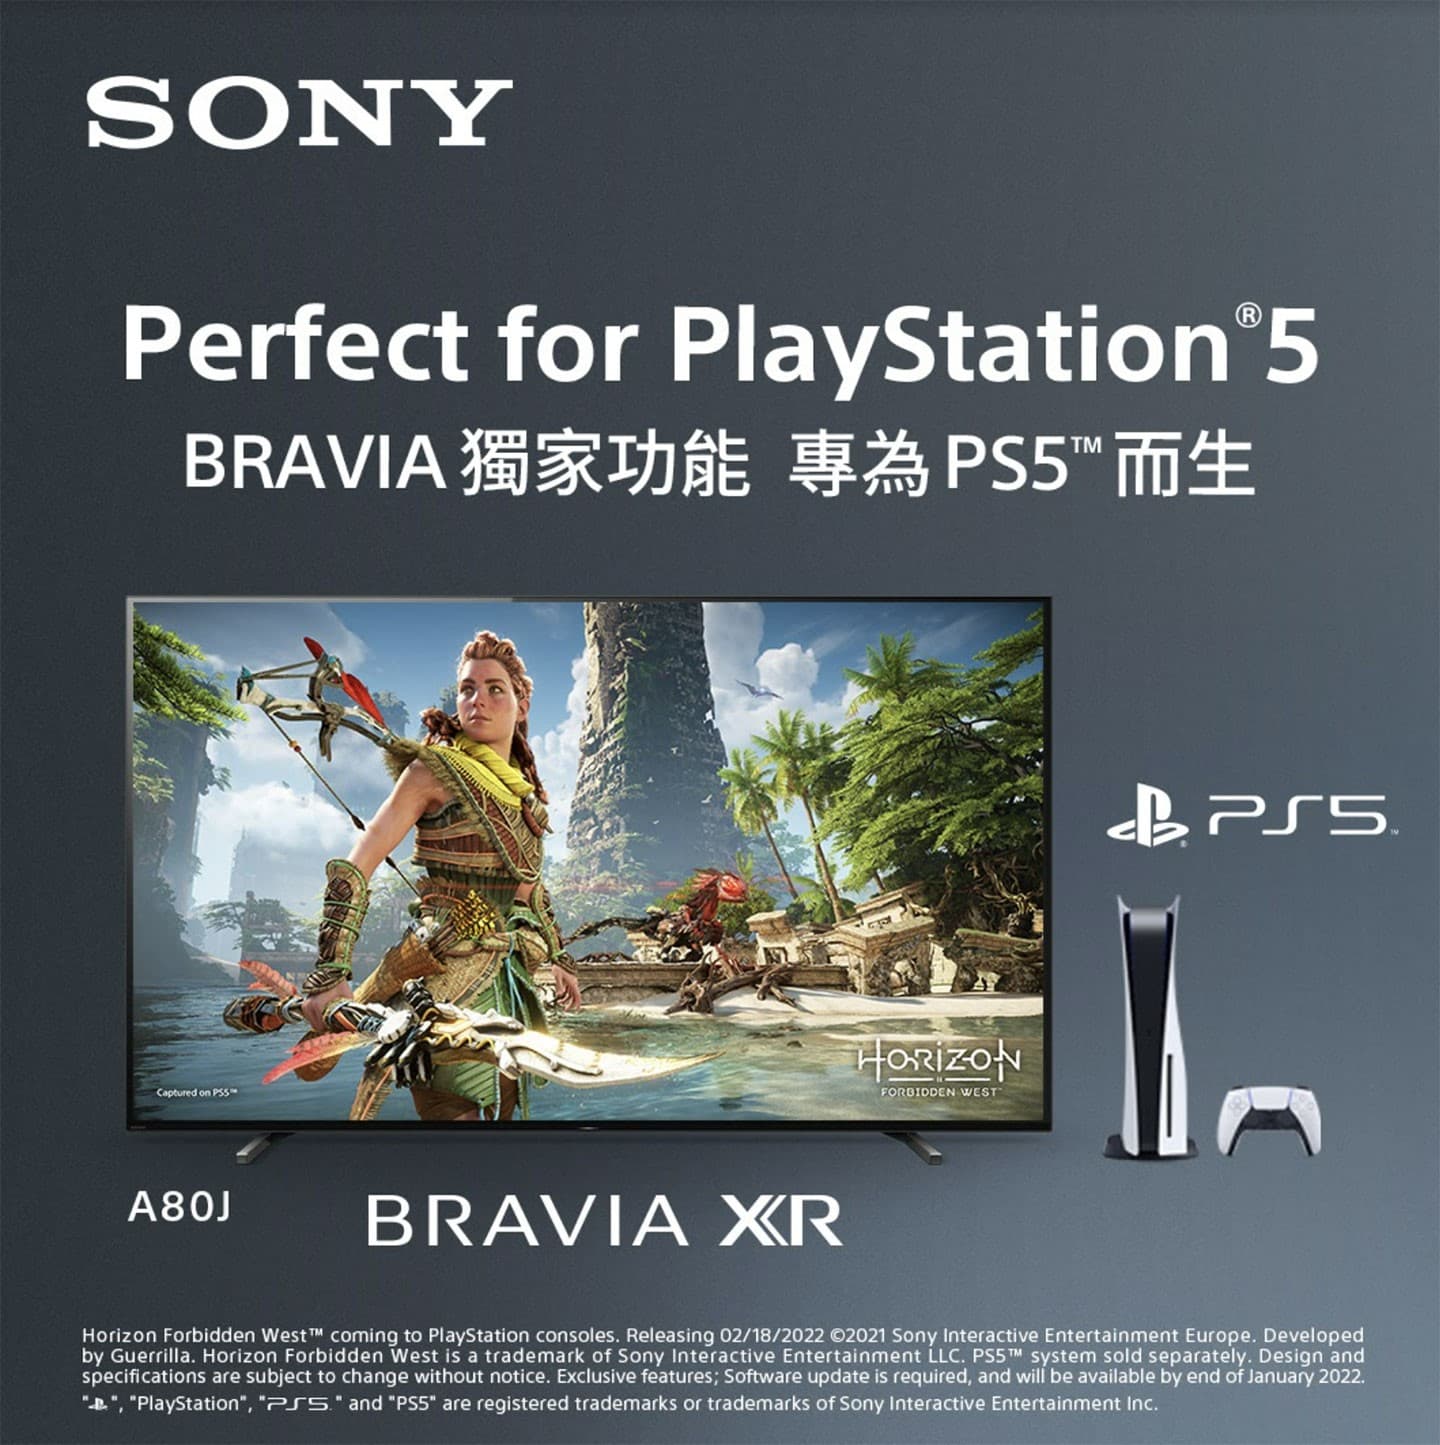 Sony BRAVIA 繼去年推出「Ready for PlayStation 5」系列產品後，今年的 BRAVIA XR 也將透過更新進階成為「Perfect for PlayStation 5」的 PS5 主機�配最佳化顯示器。